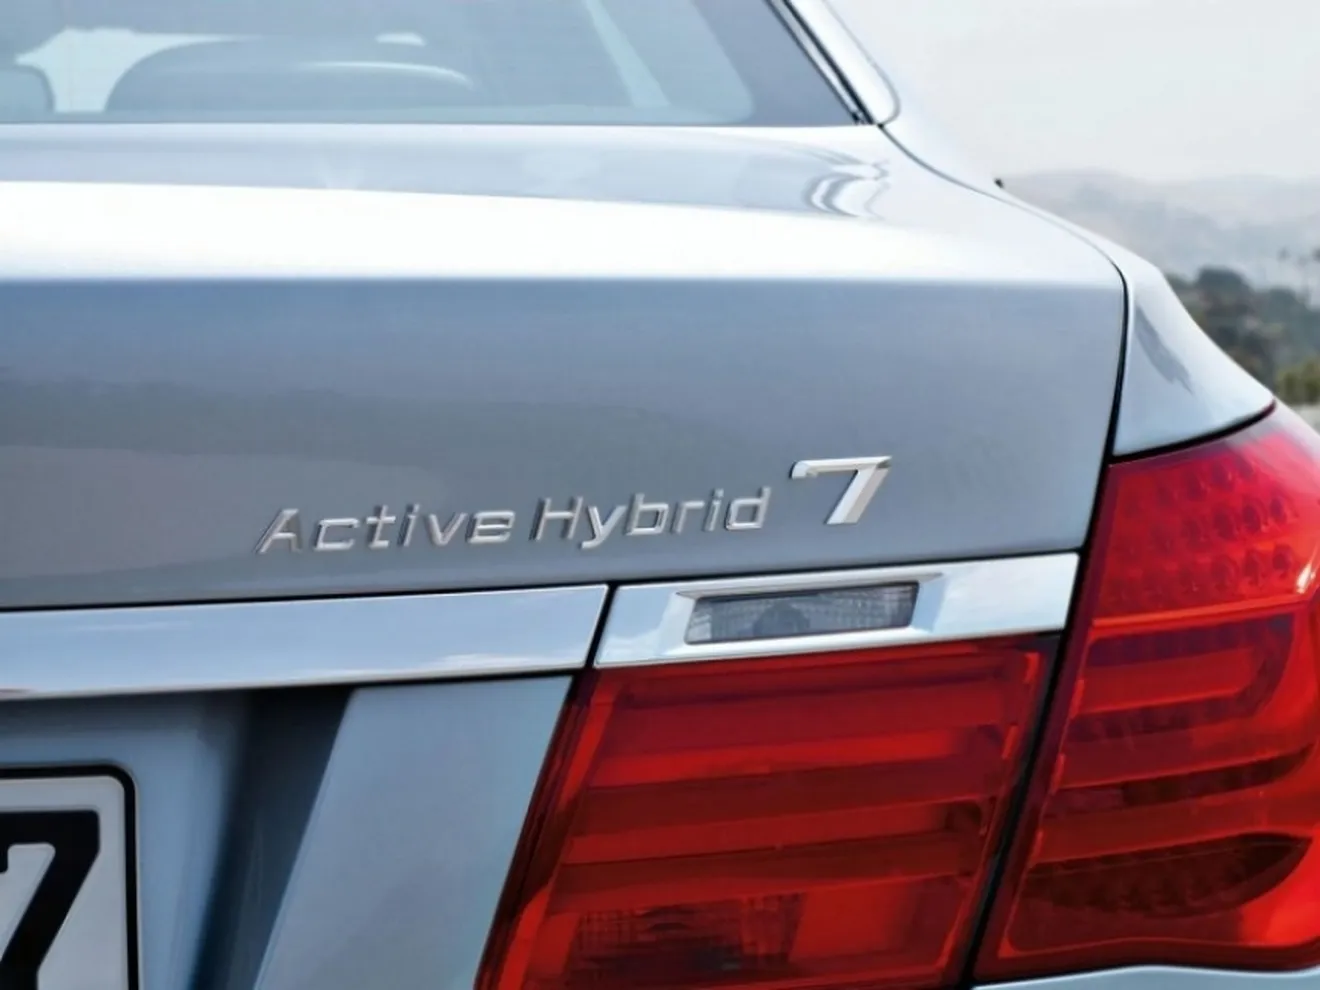 BMW 7 ActiveHybrid, un señor coche